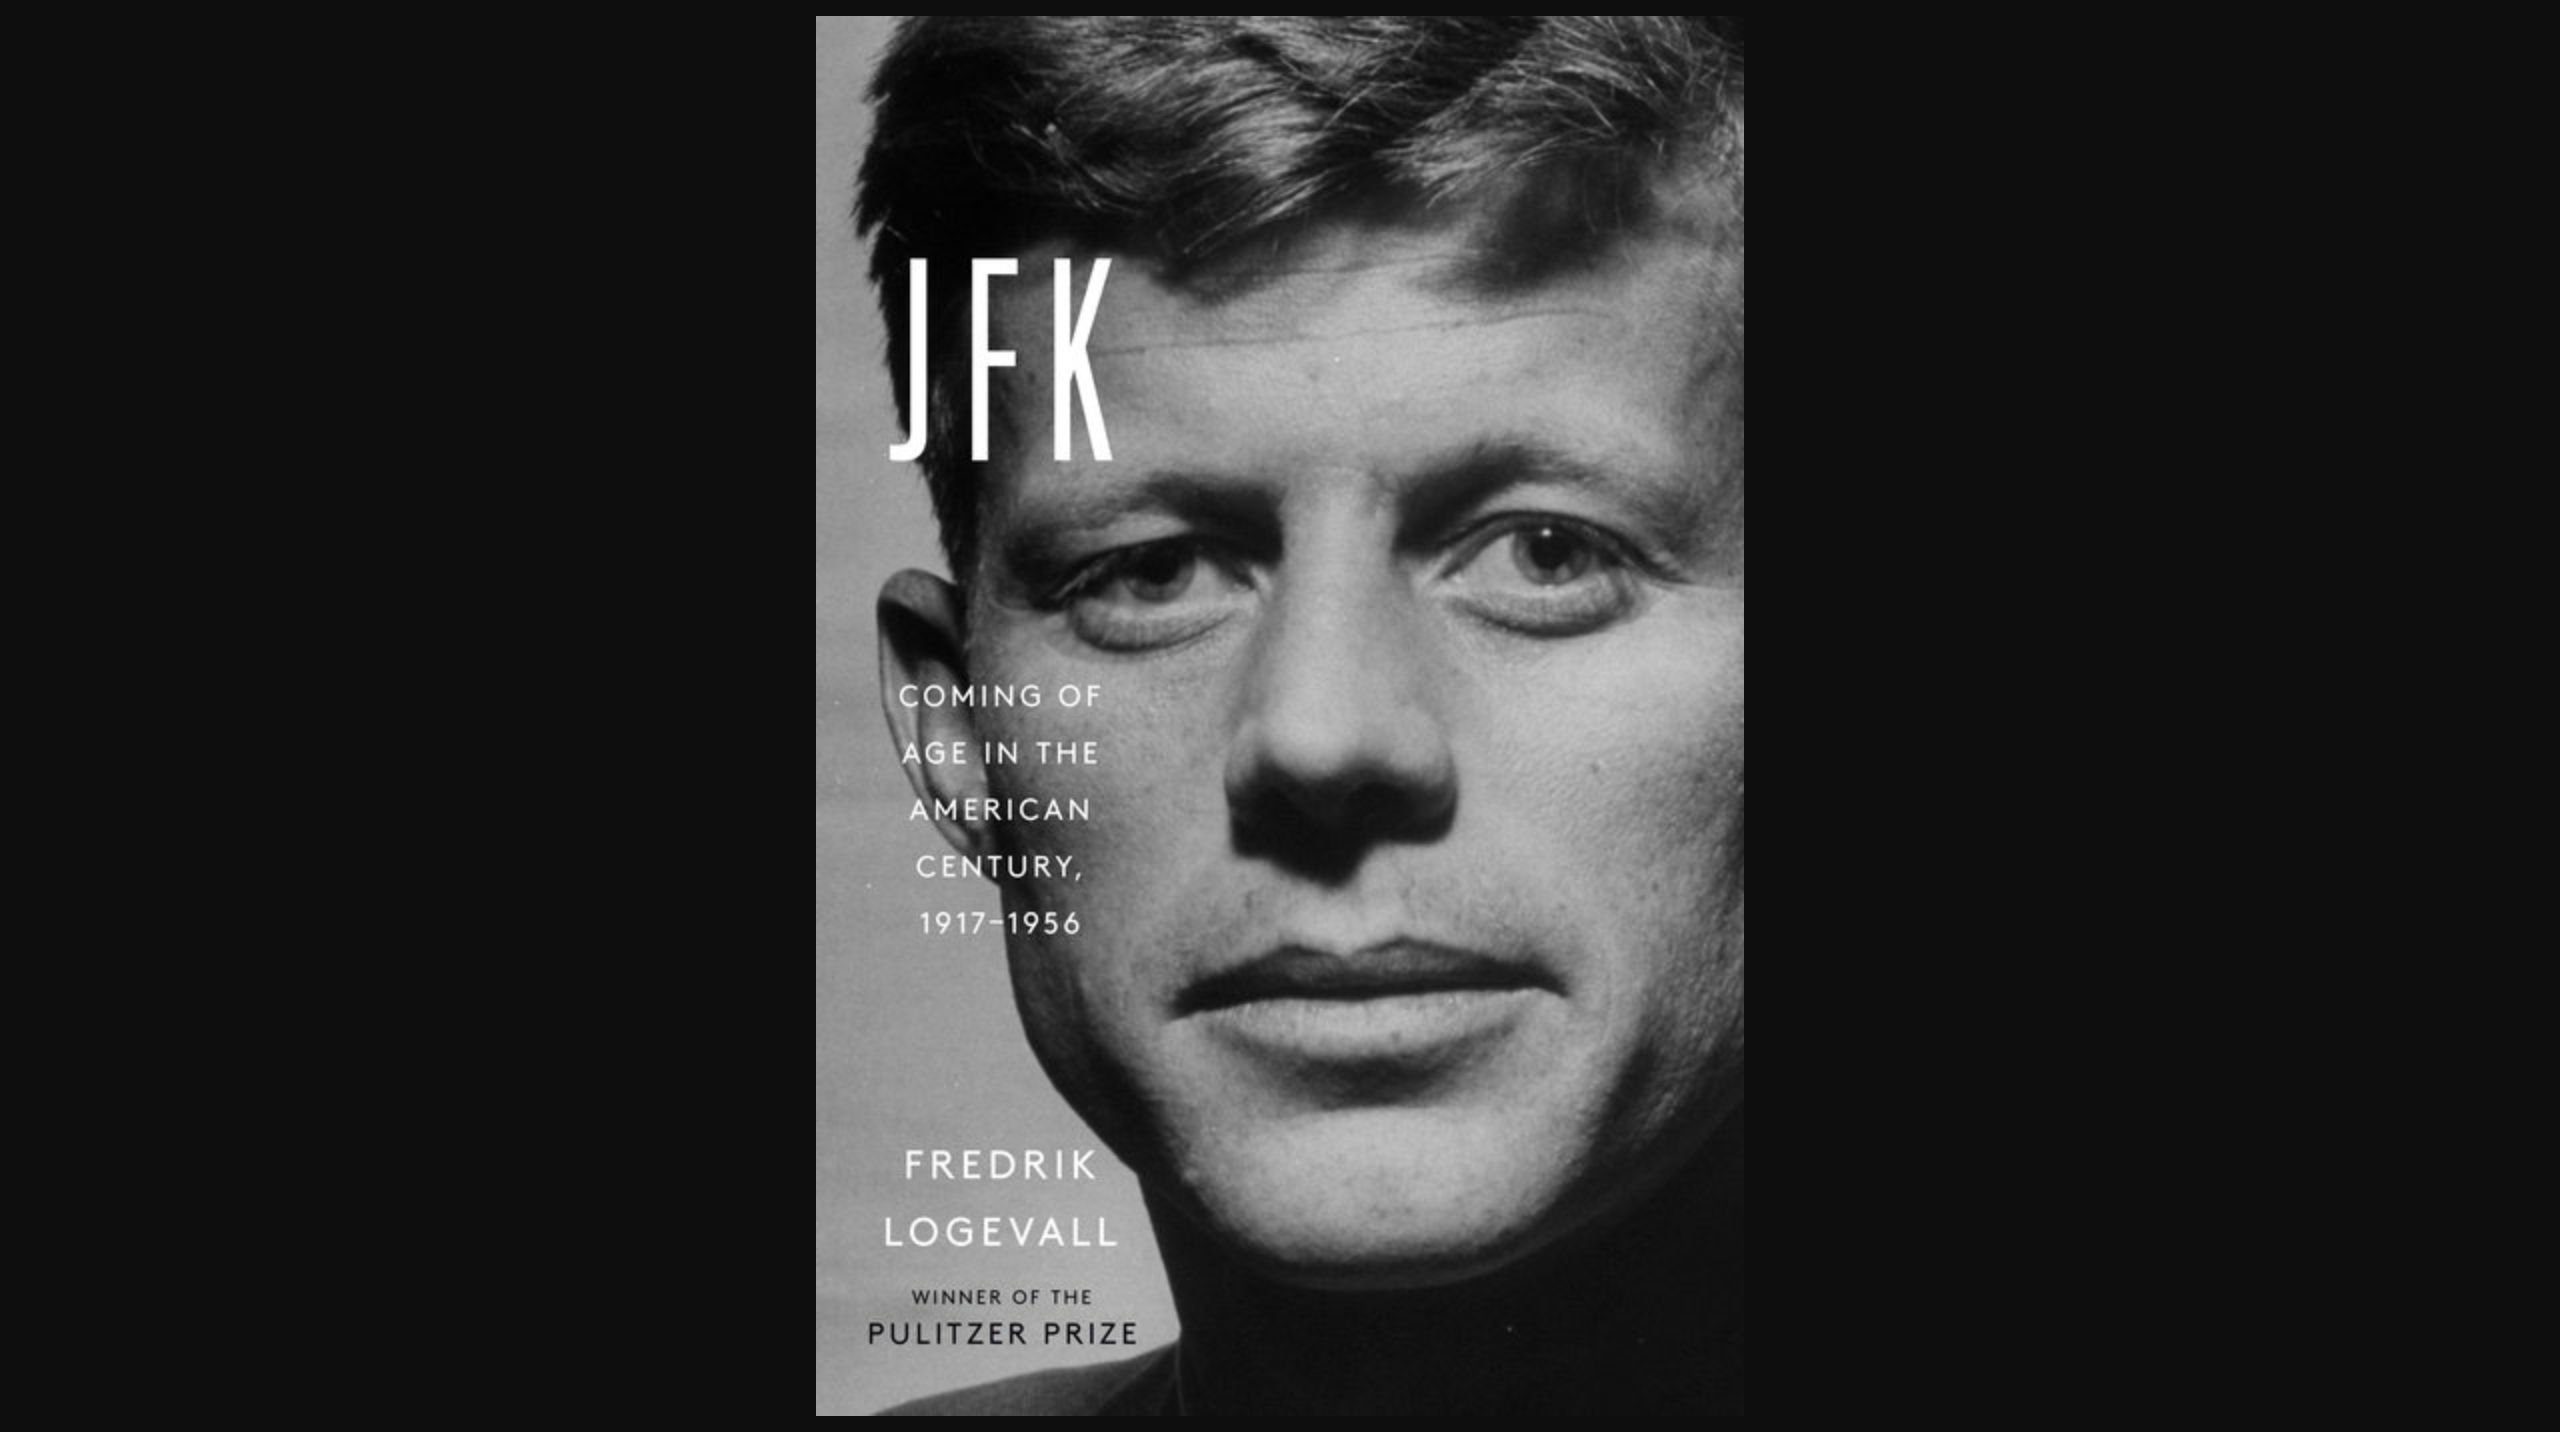 JFK by Fredrik Logevall